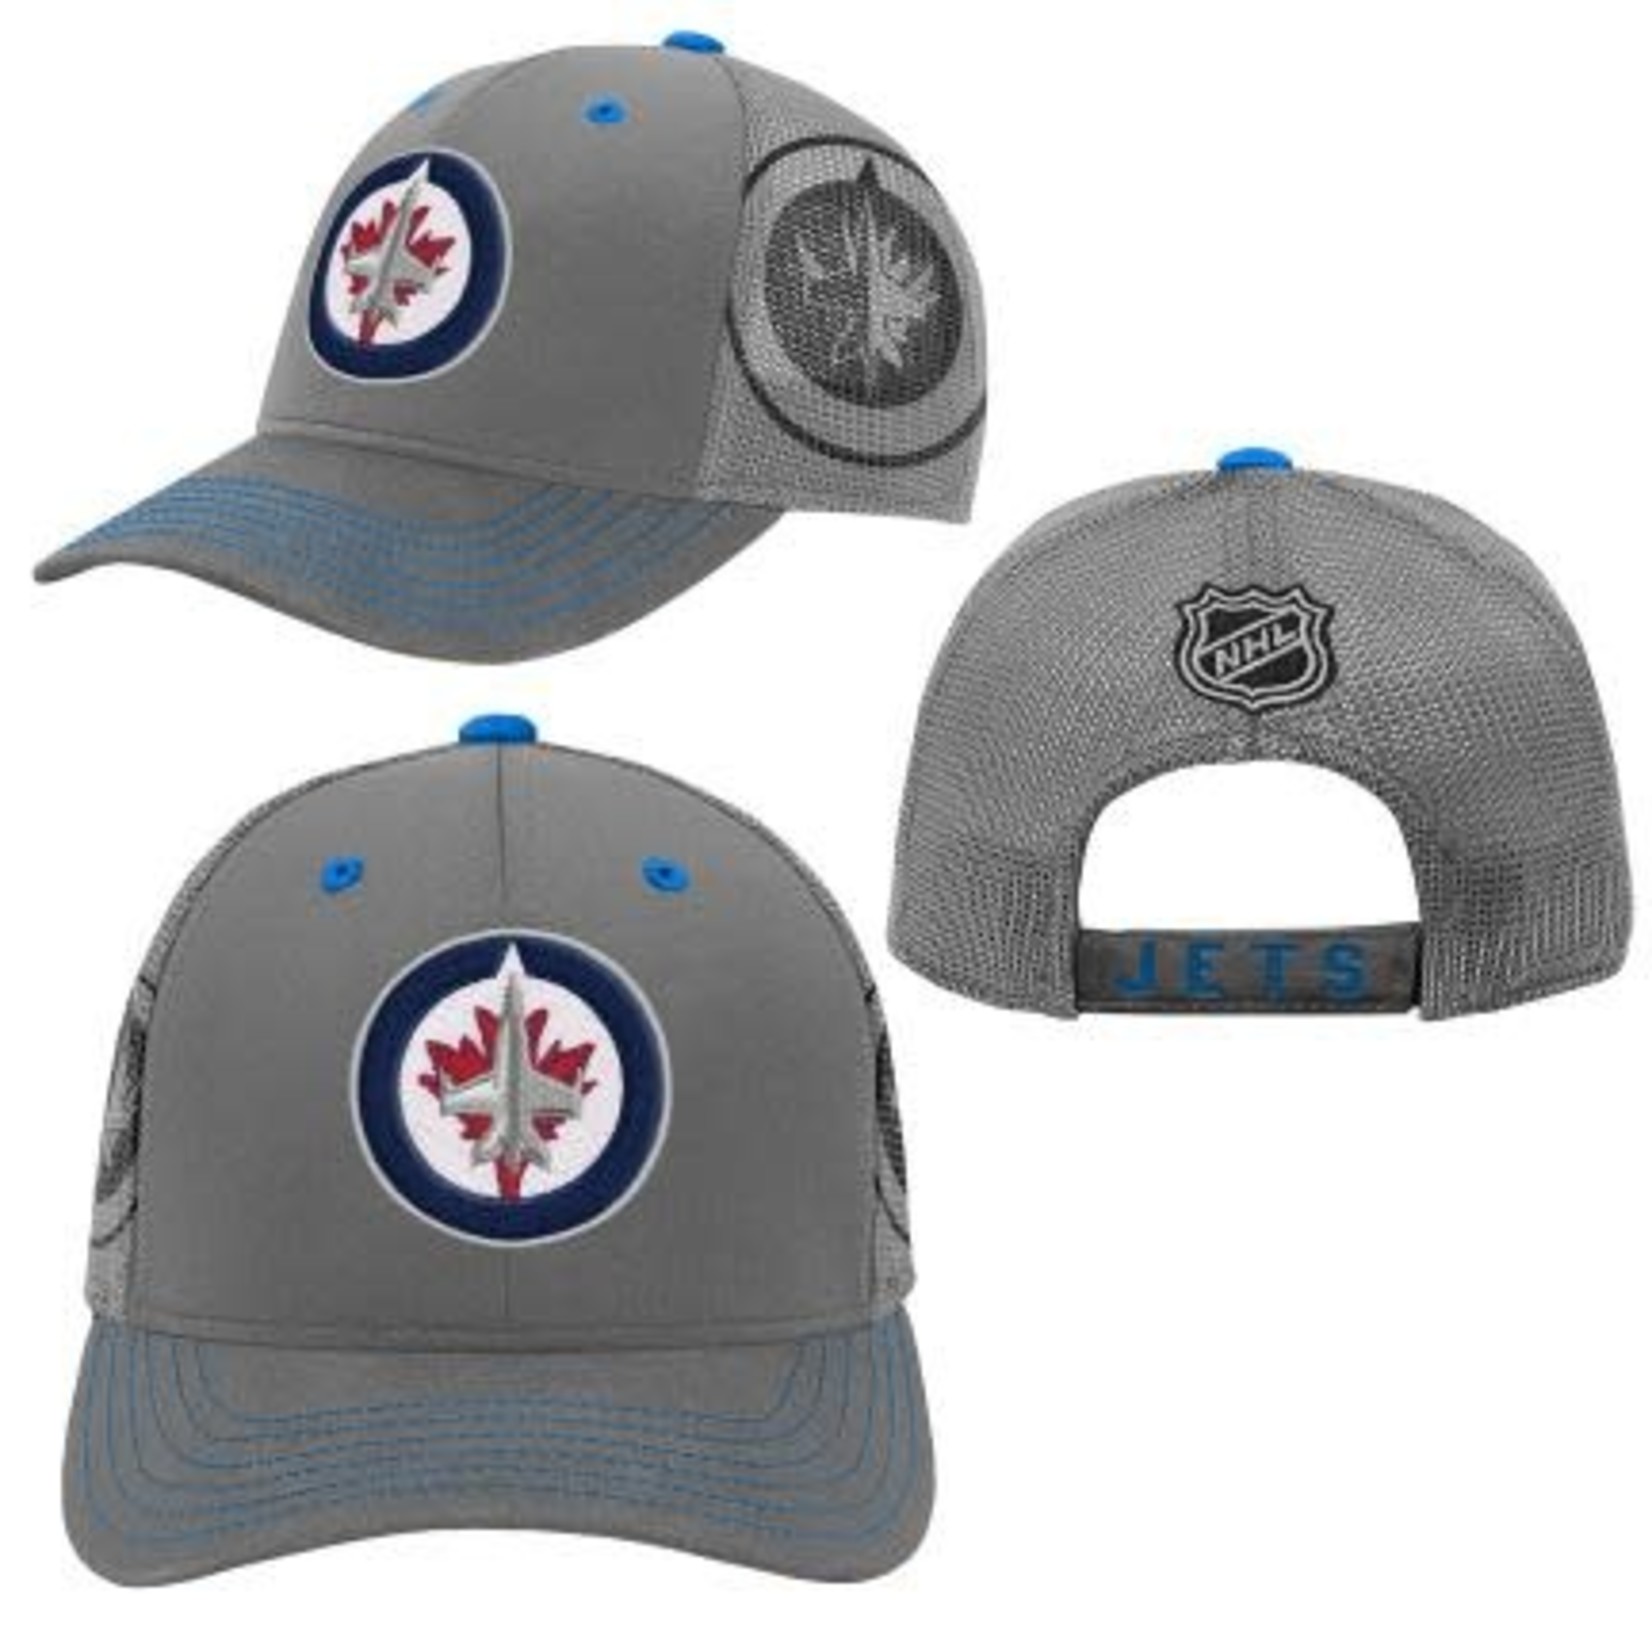 Outerstuff Outerstuff Hat, Structured Meshback Adjustable, NHL, Winnipeg Jets, Youth, OS